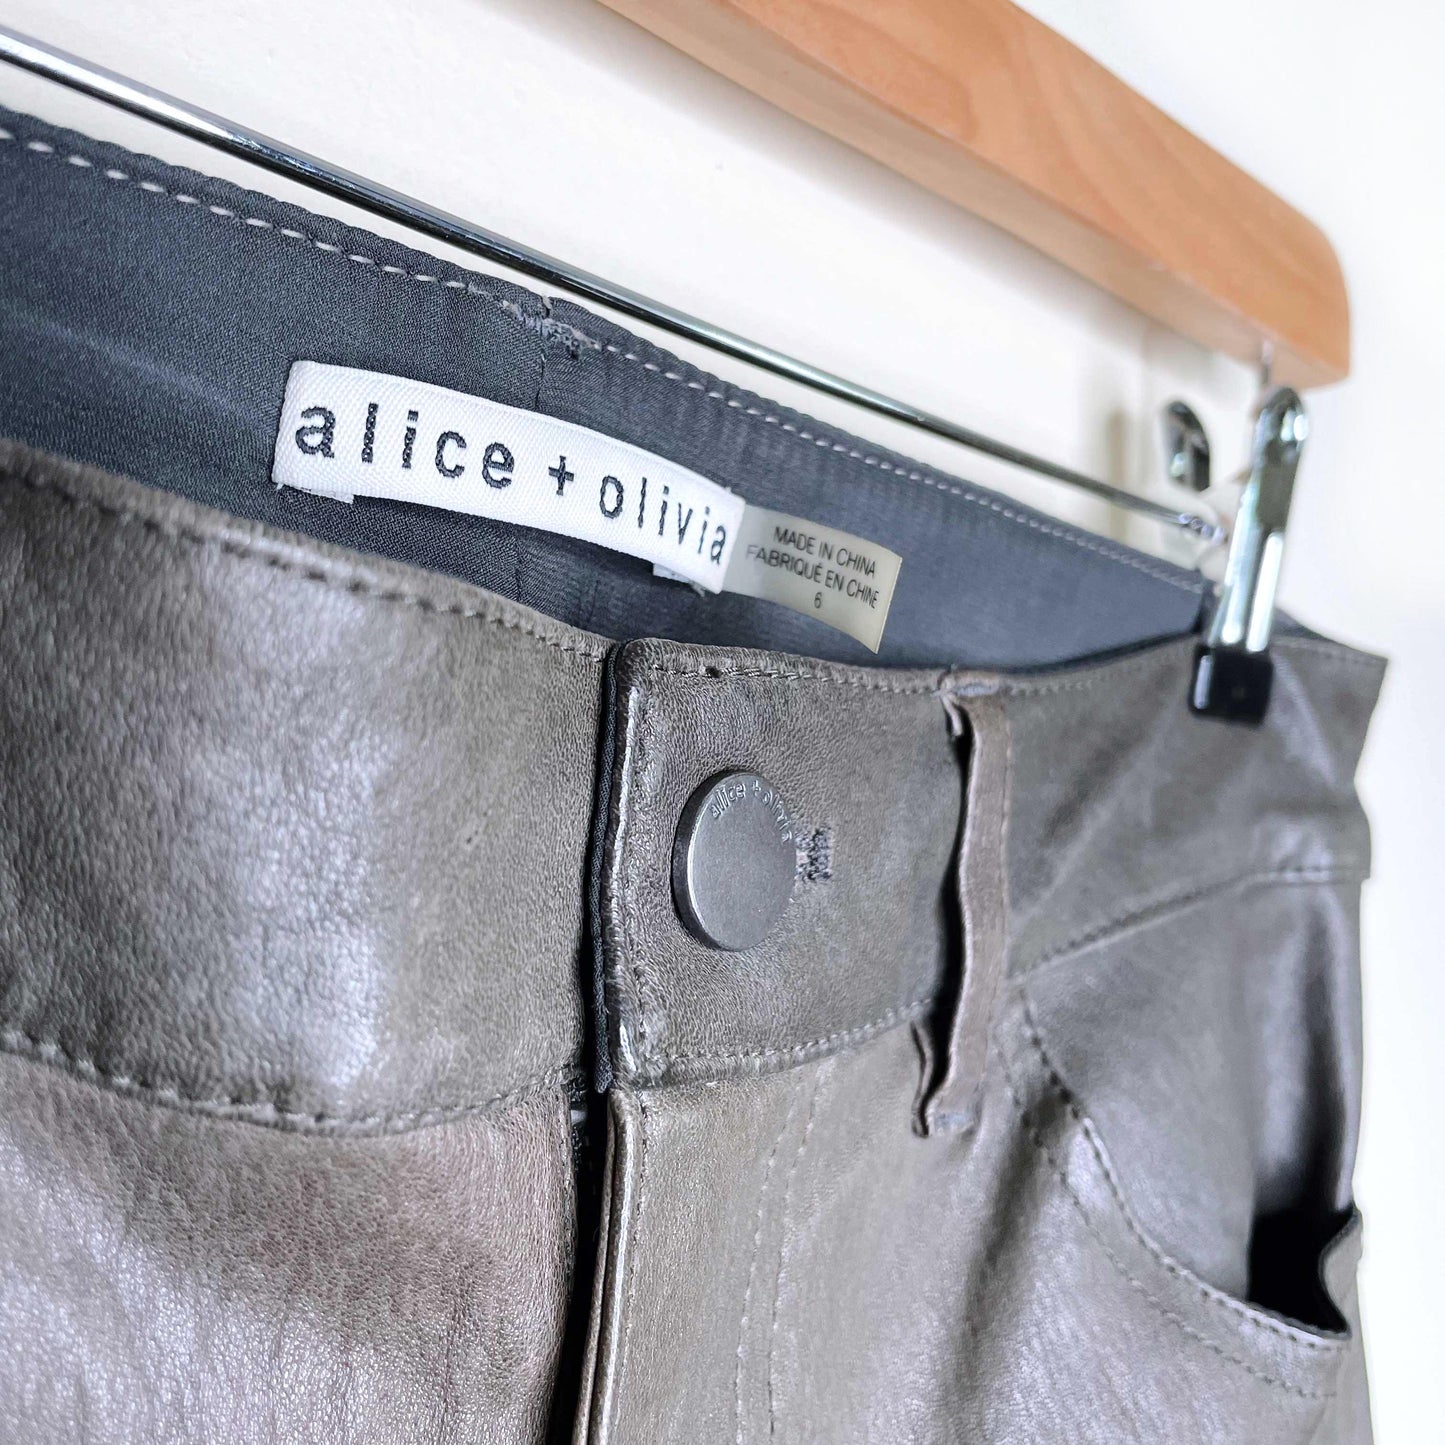 alice + olivia brown lambskin leather skinny pants - size 6